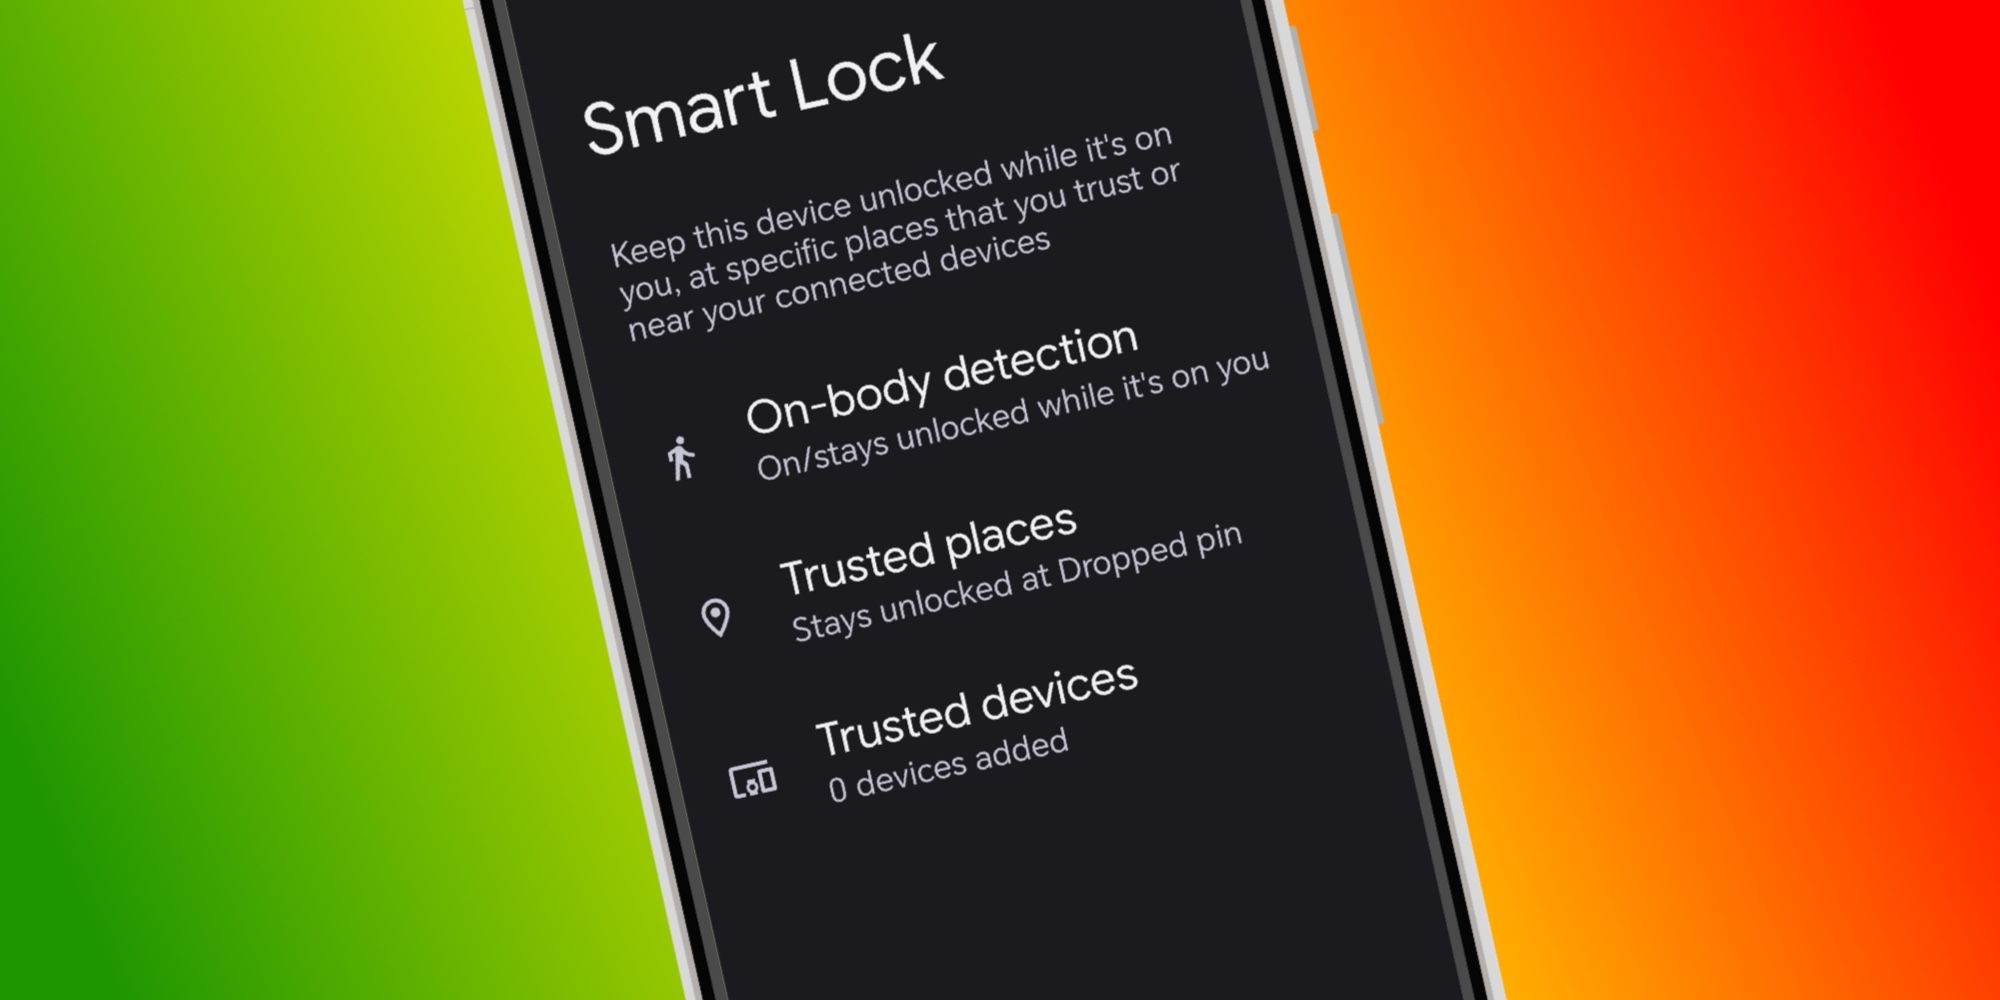 Smart Lock settings on Android